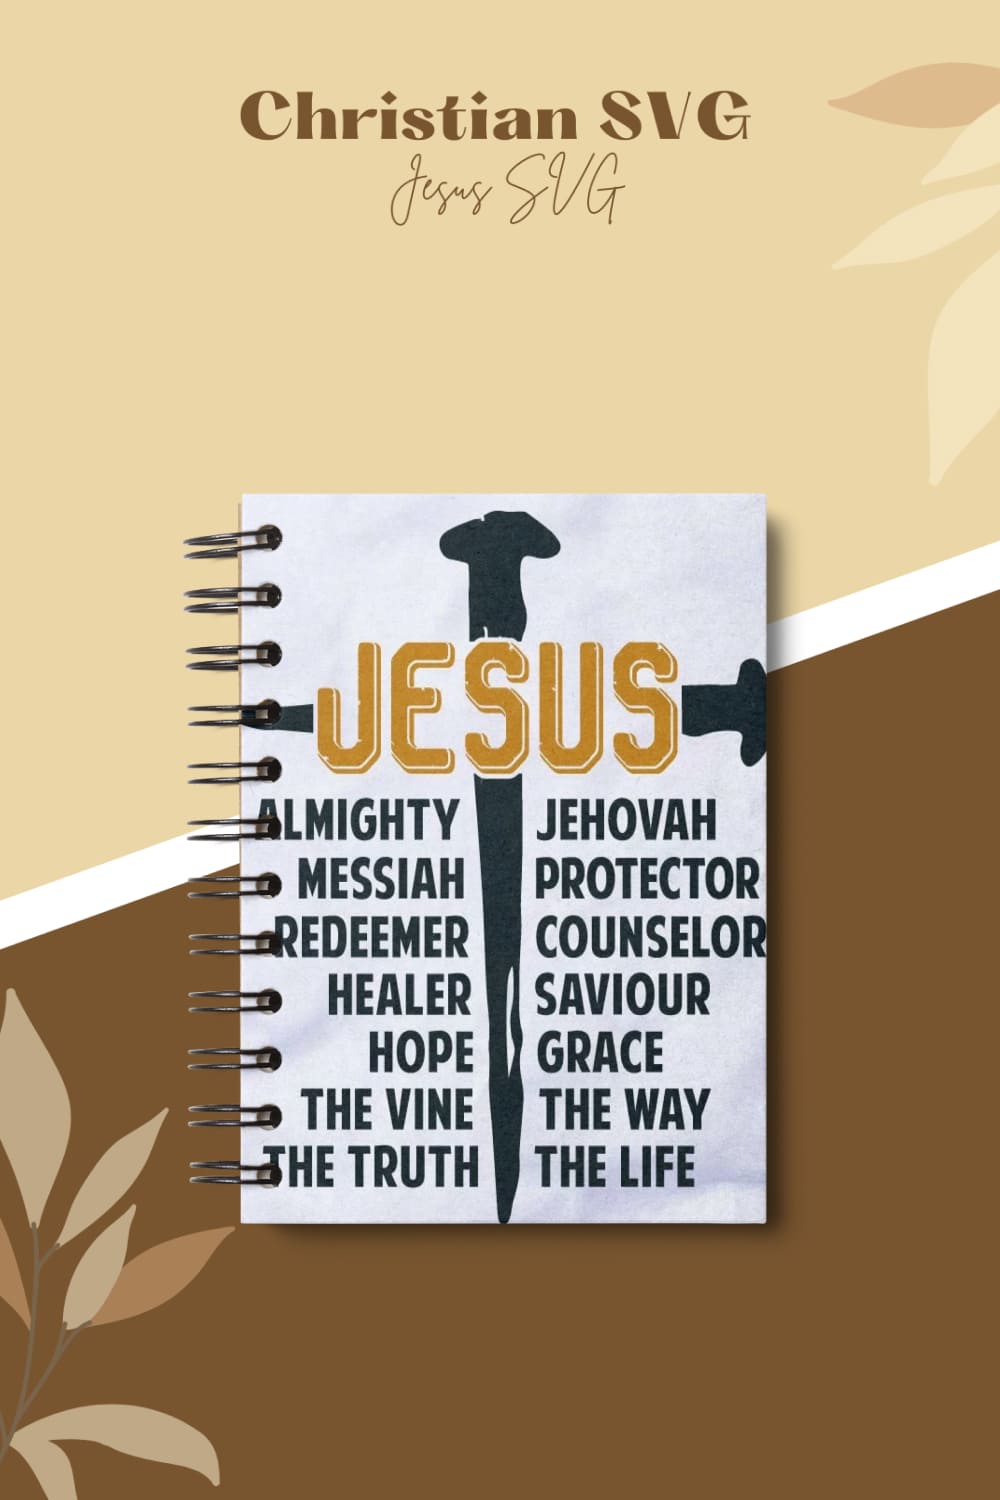 Inscription "Jesus SVG Christian SVG T-Shirt Design Vintage Nails Cross" on the notebook.